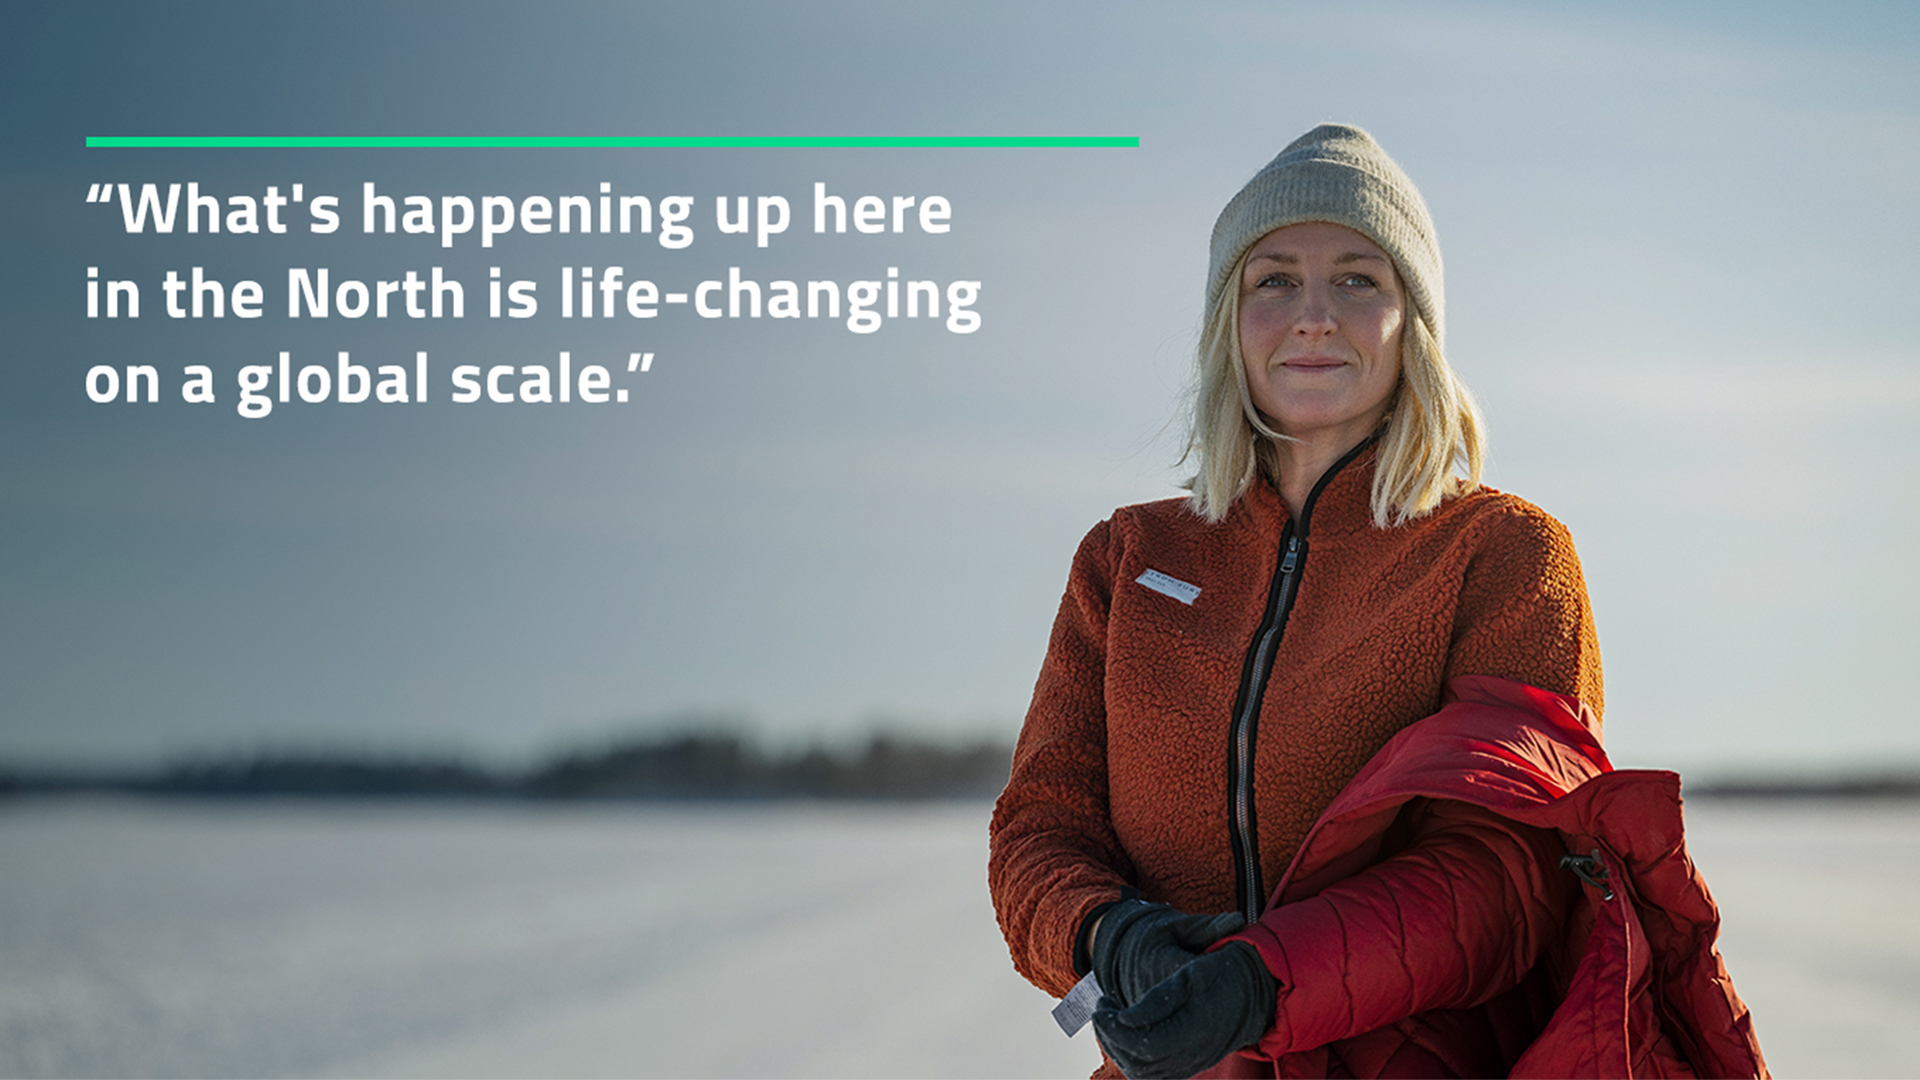 Kvinna utomhus i vintermiljö, med citat i bilden: "What's happening up here in the North is life-changing on a global scale"